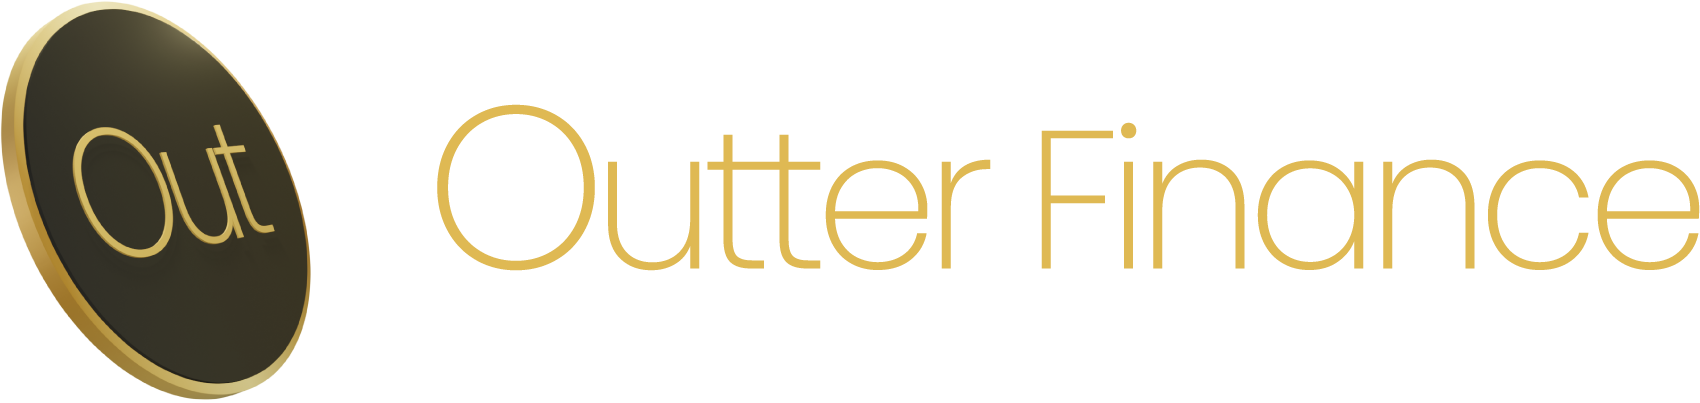 outter-finance-logo-3